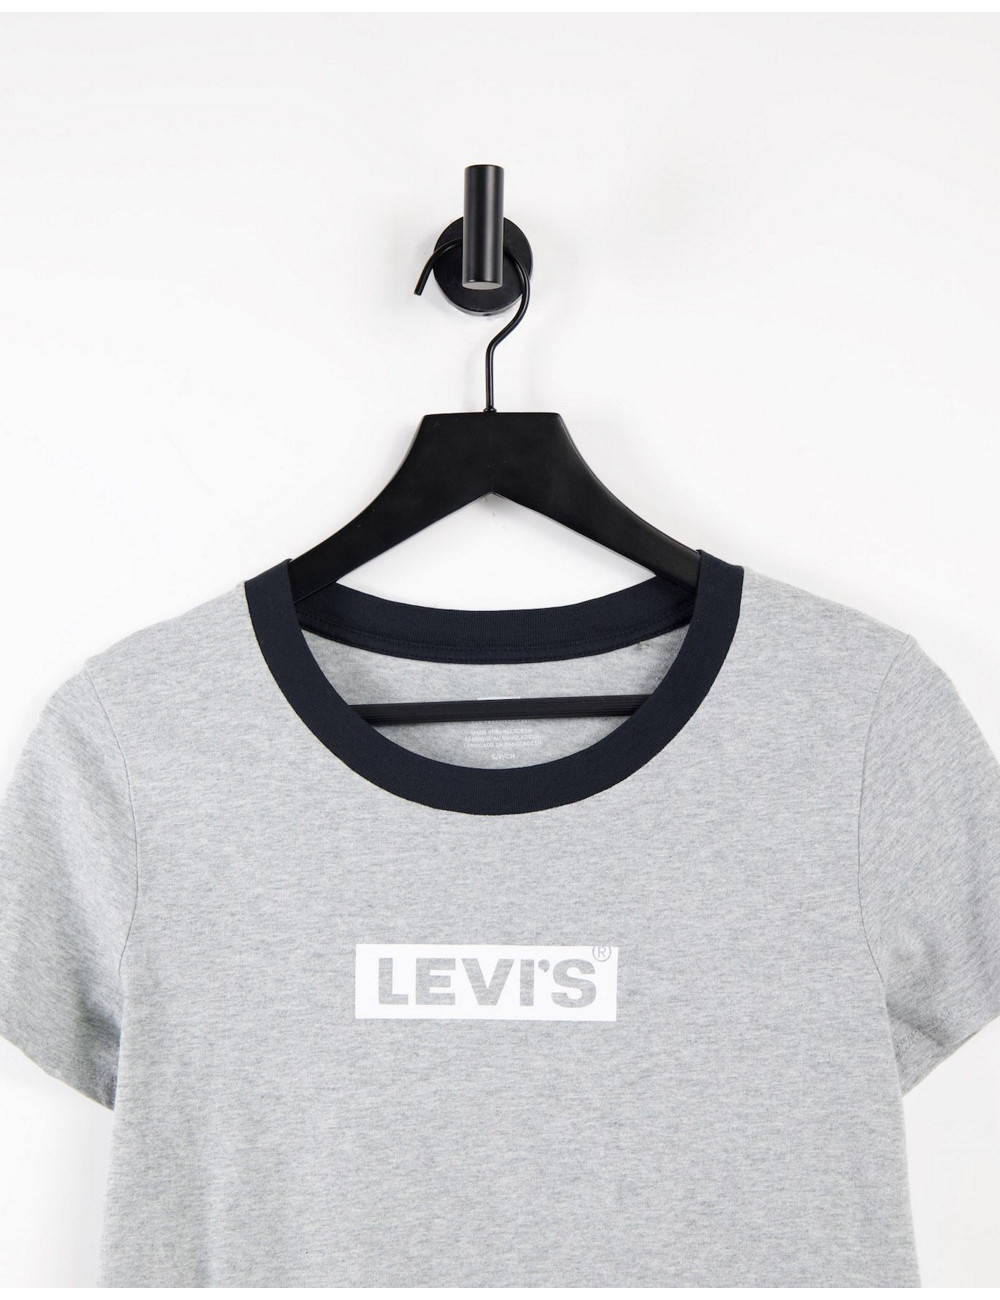 Levi's logo ringer tee in grey